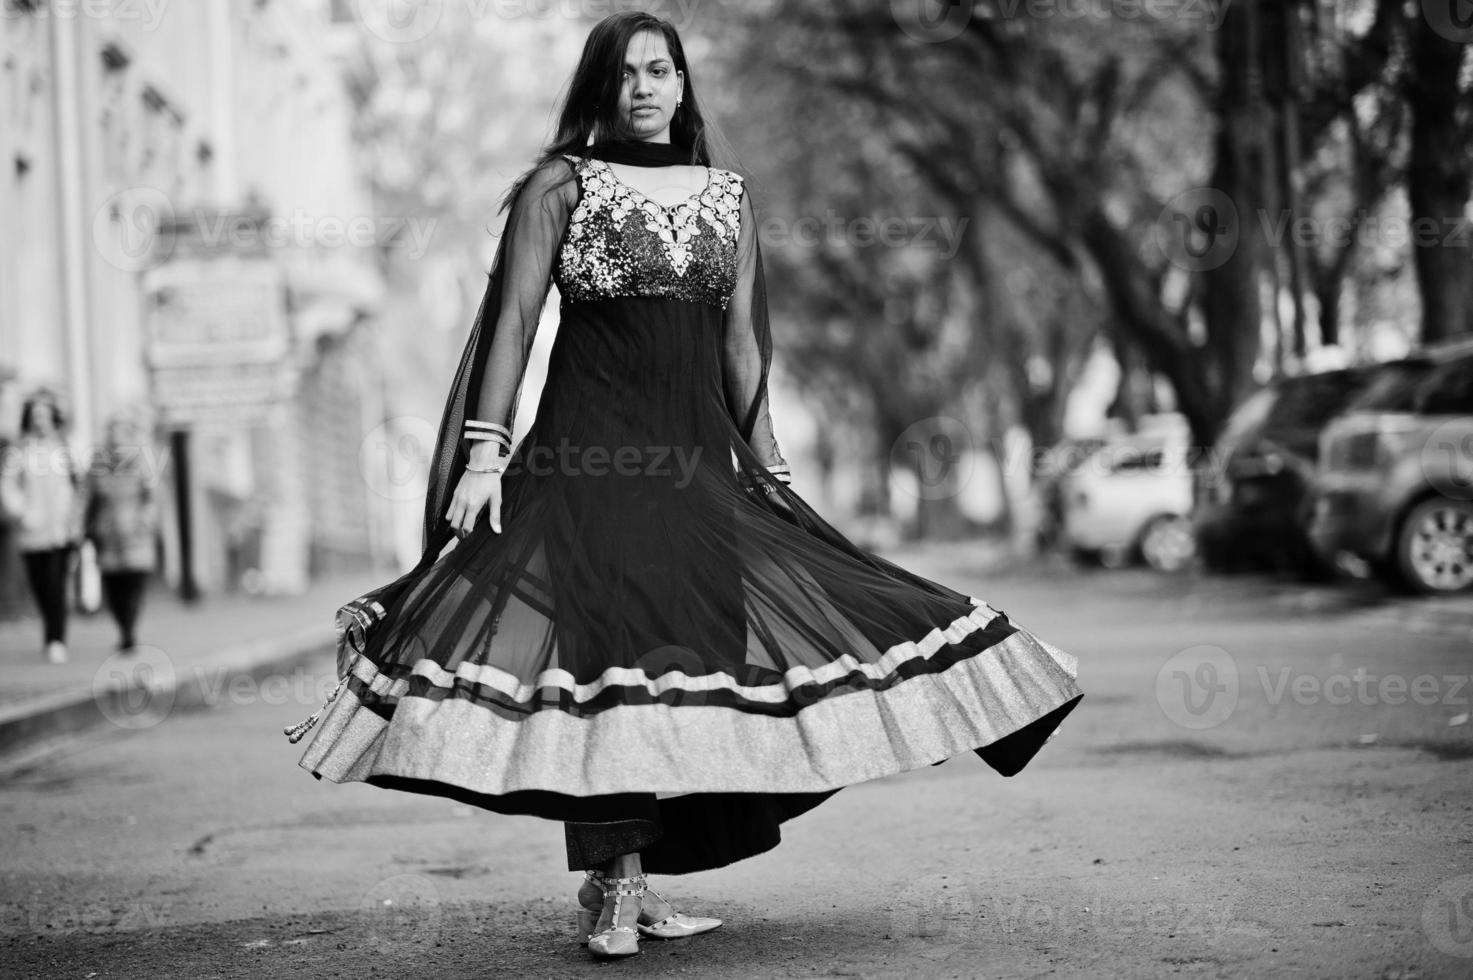 menina bonita indiana no vestido preto saree posou ao ar livre na rua outono. foto